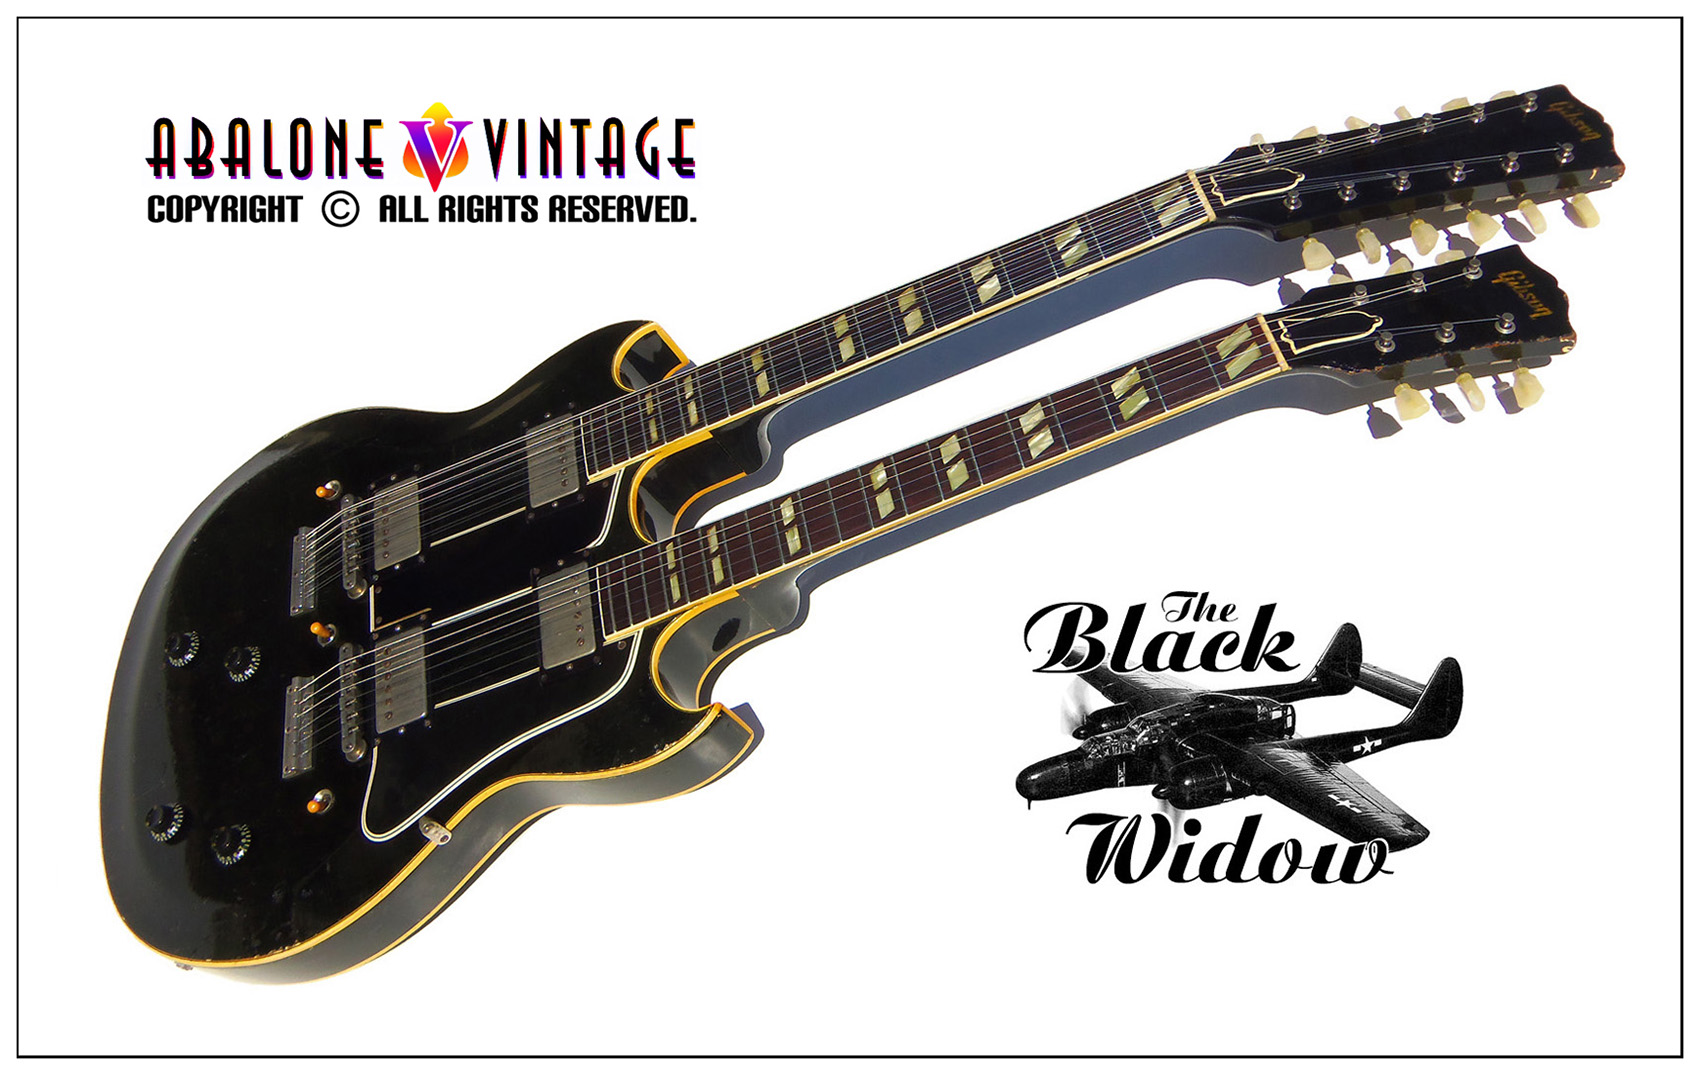 1959 Gibson EDS-1275 Double Twelve Double Neck Guitar. "The Black Widow." Vintage guitar authentication